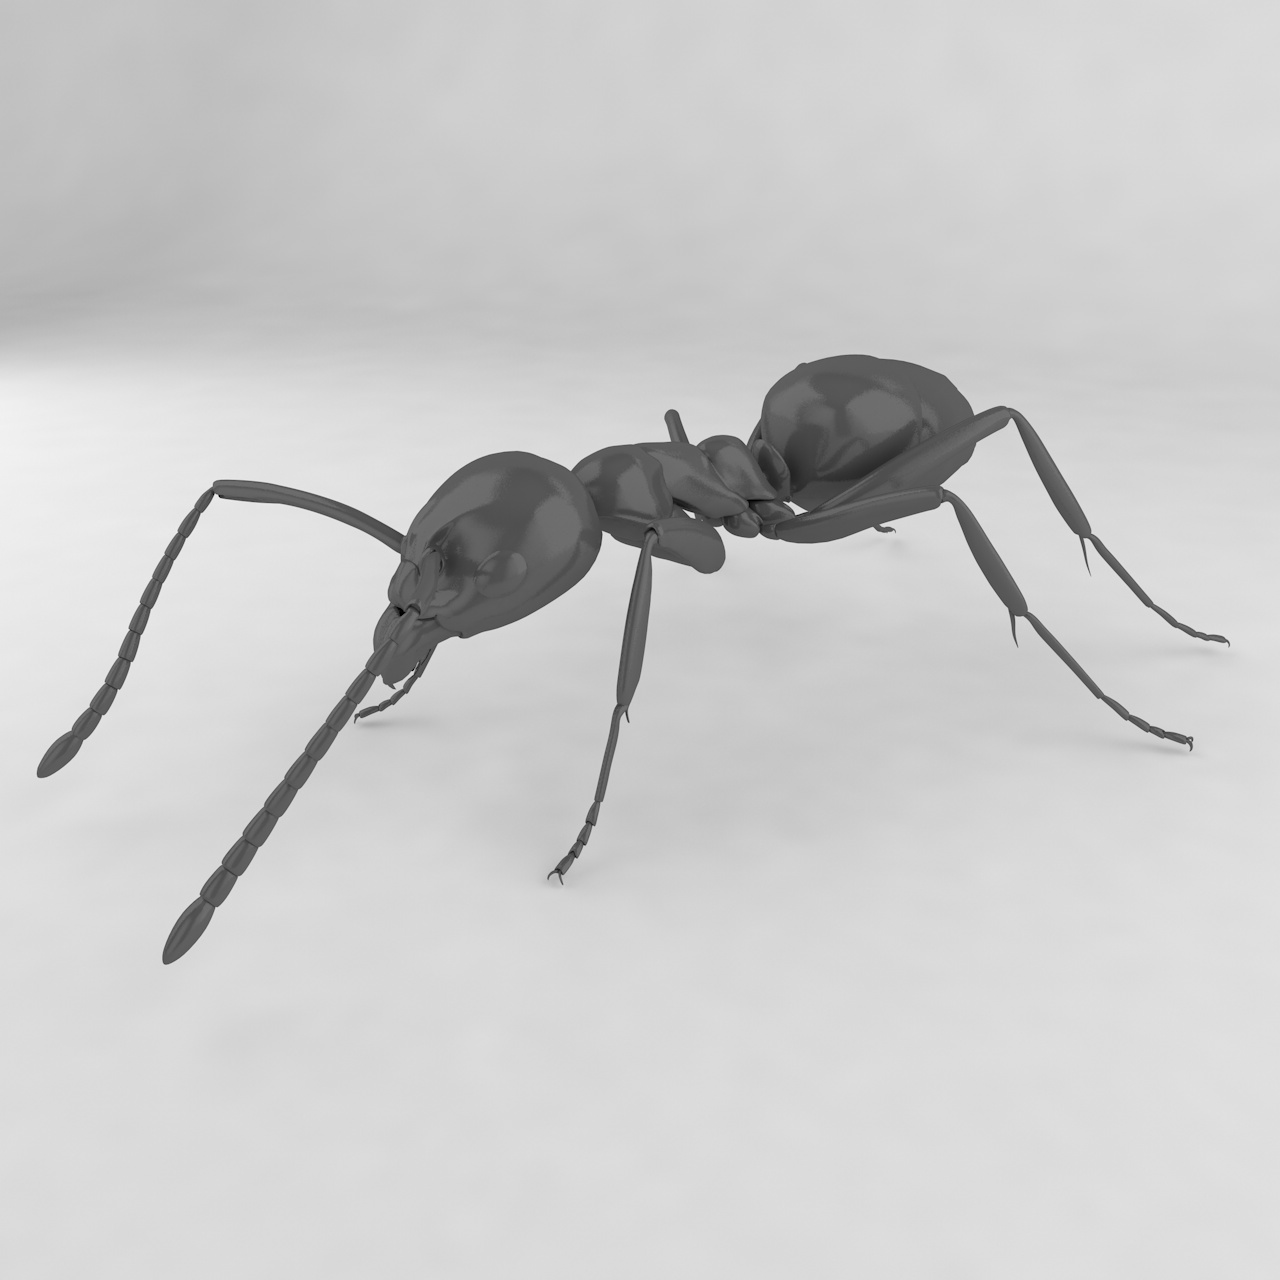 linepithema humile昆虫蚂蚁3d模型